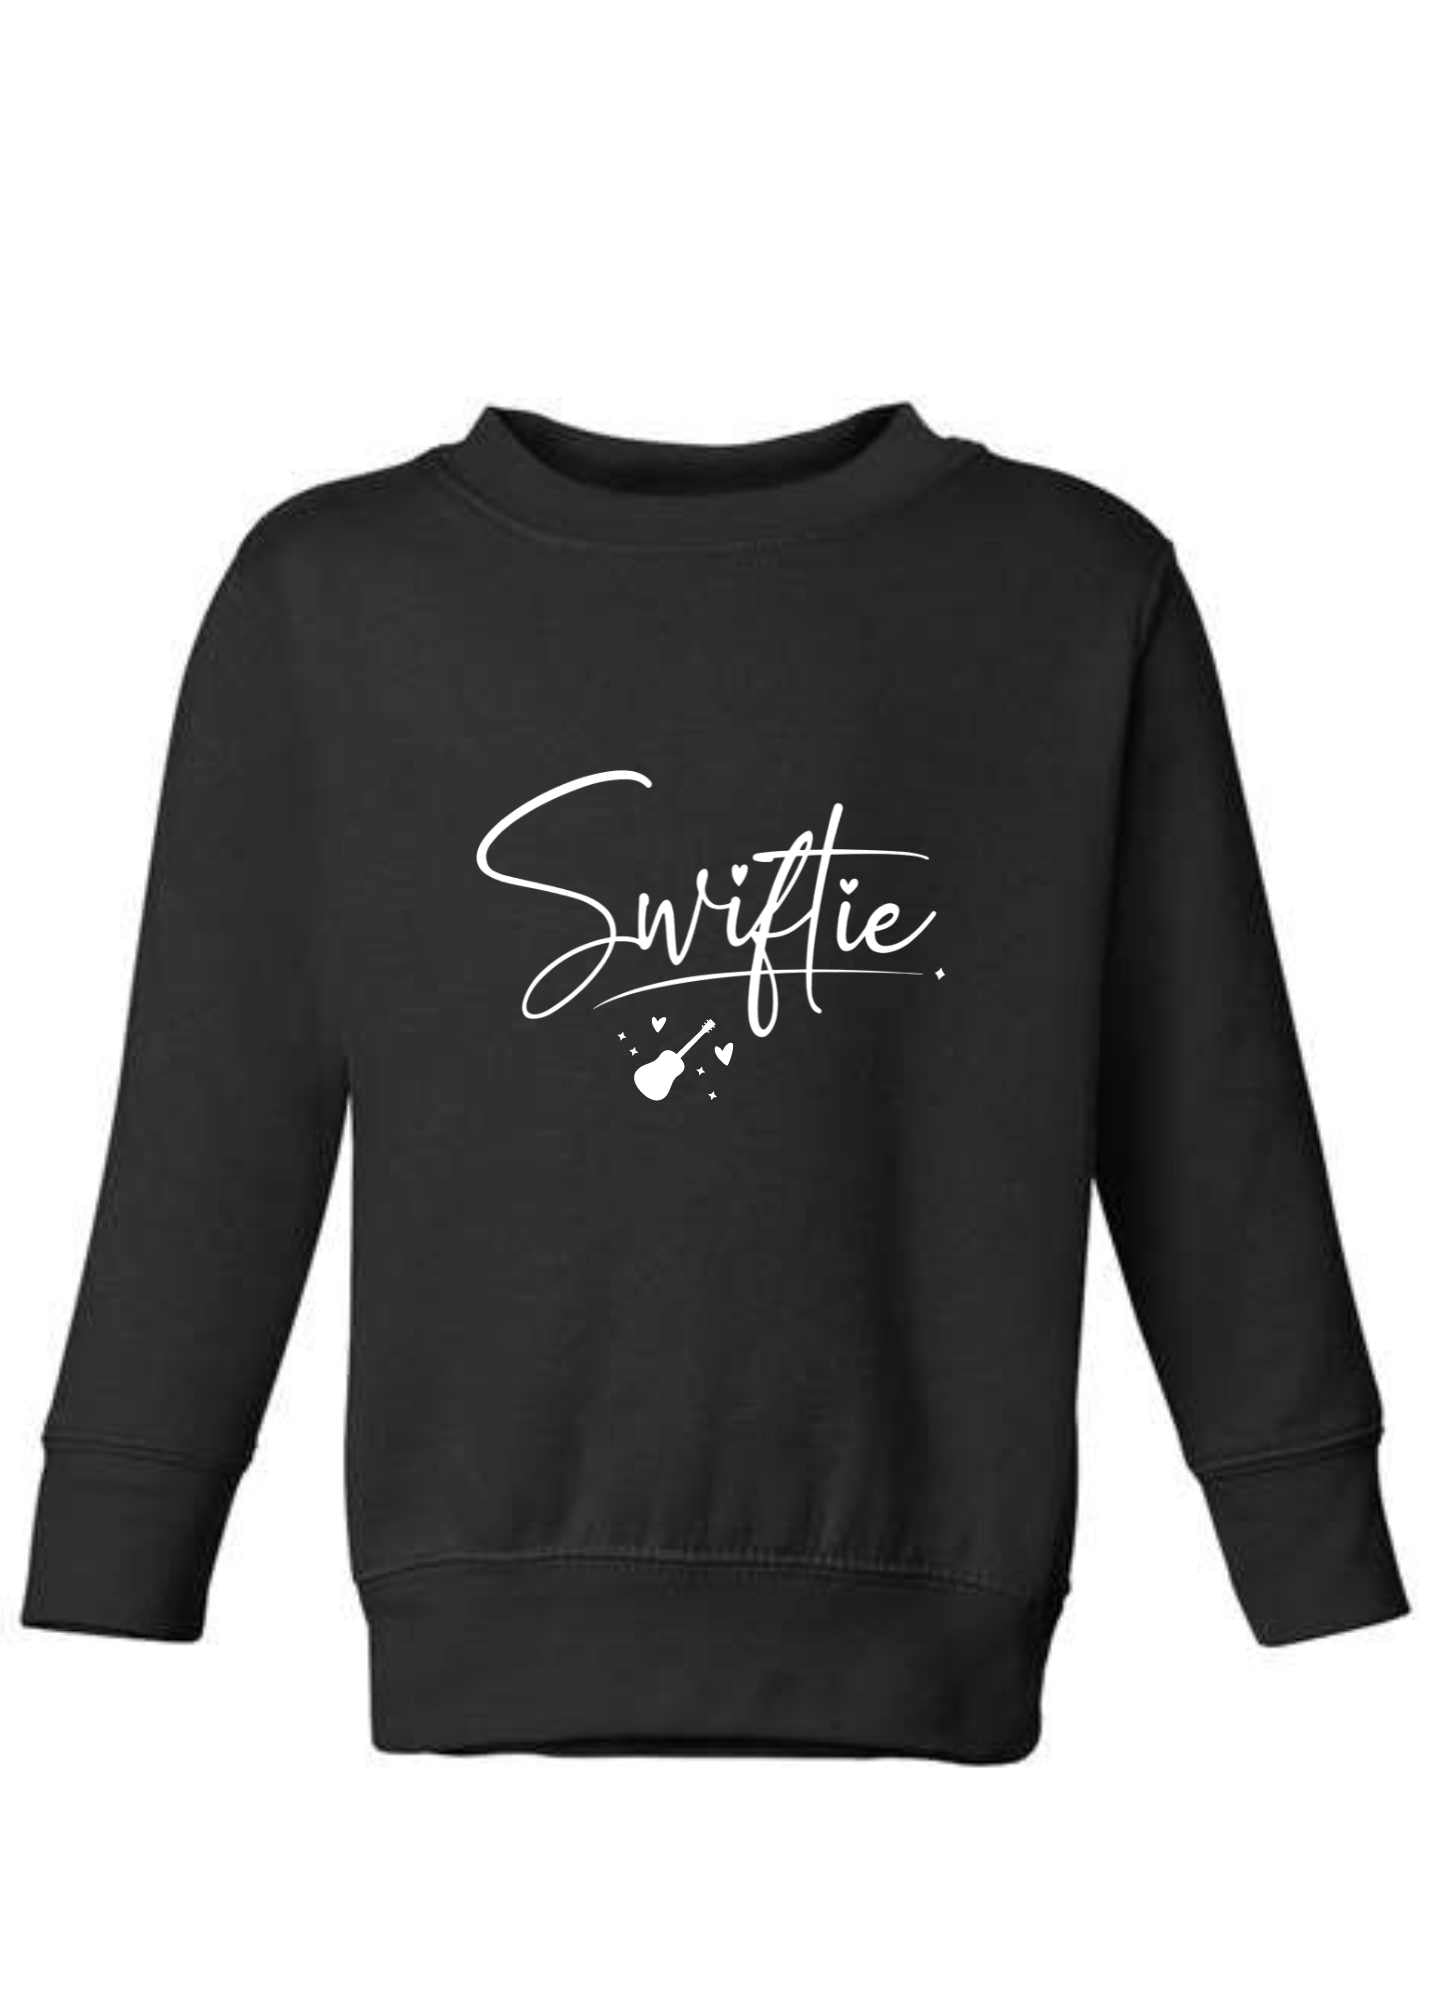 Swiftie Youth Crew Neck Sweater